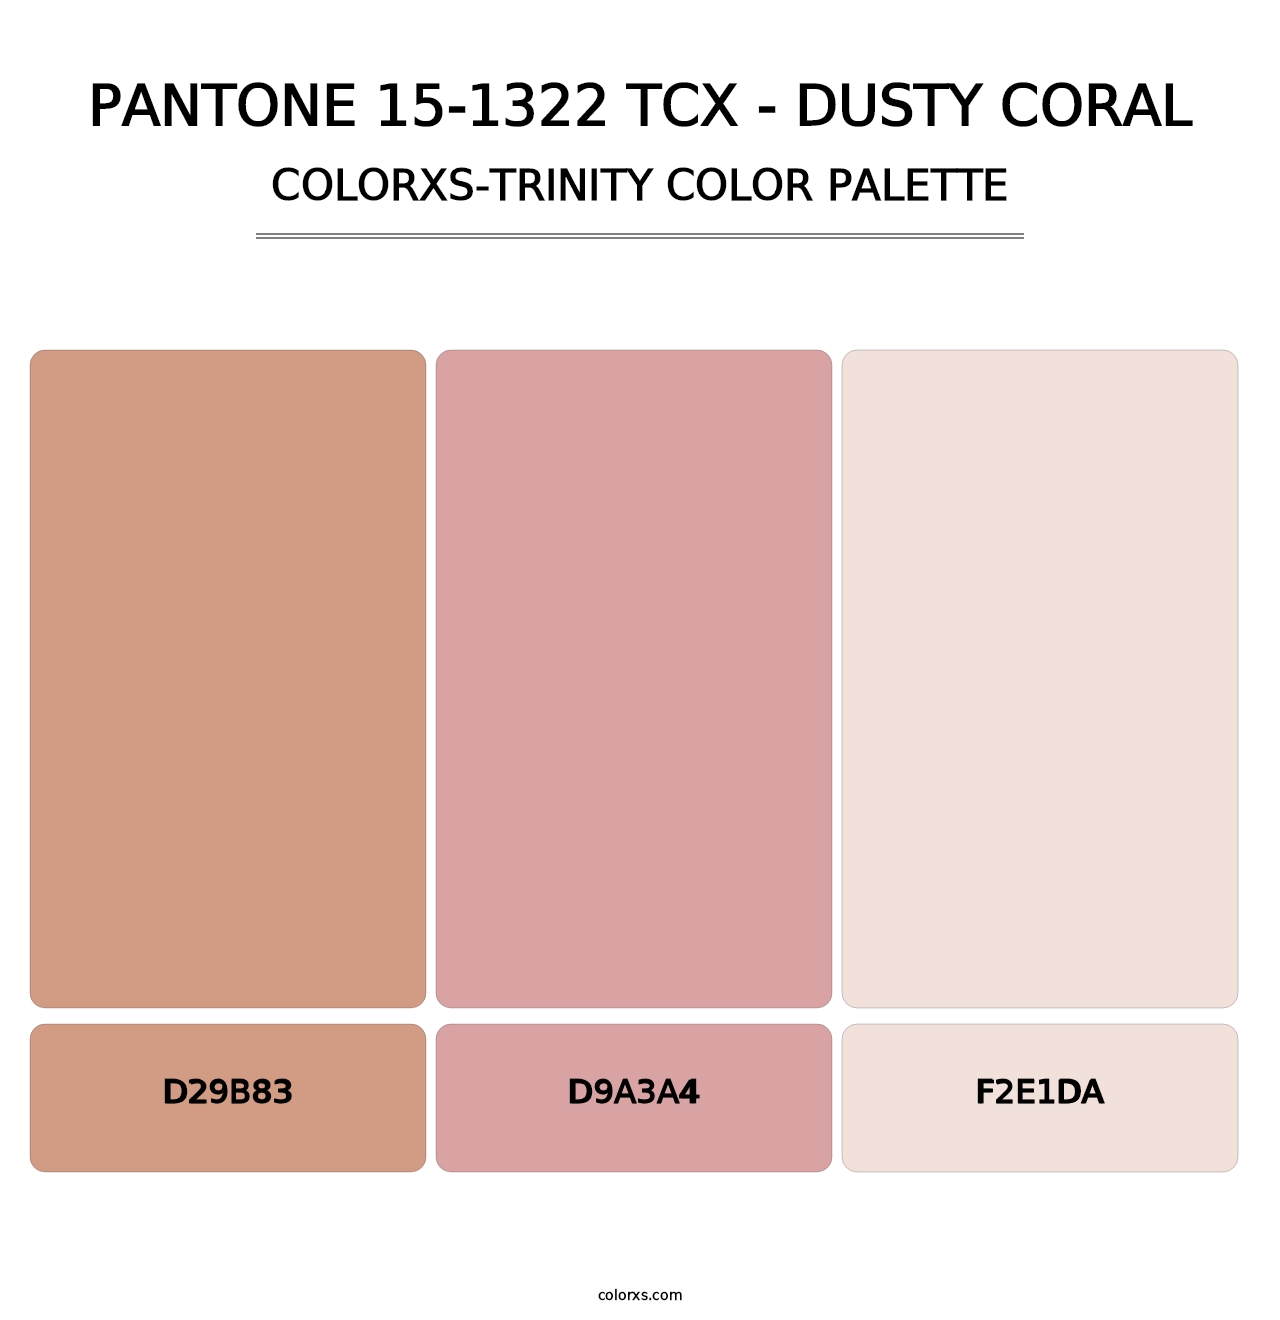 PANTONE 15-1322 TCX - Dusty Coral - Colorxs Trinity Palette